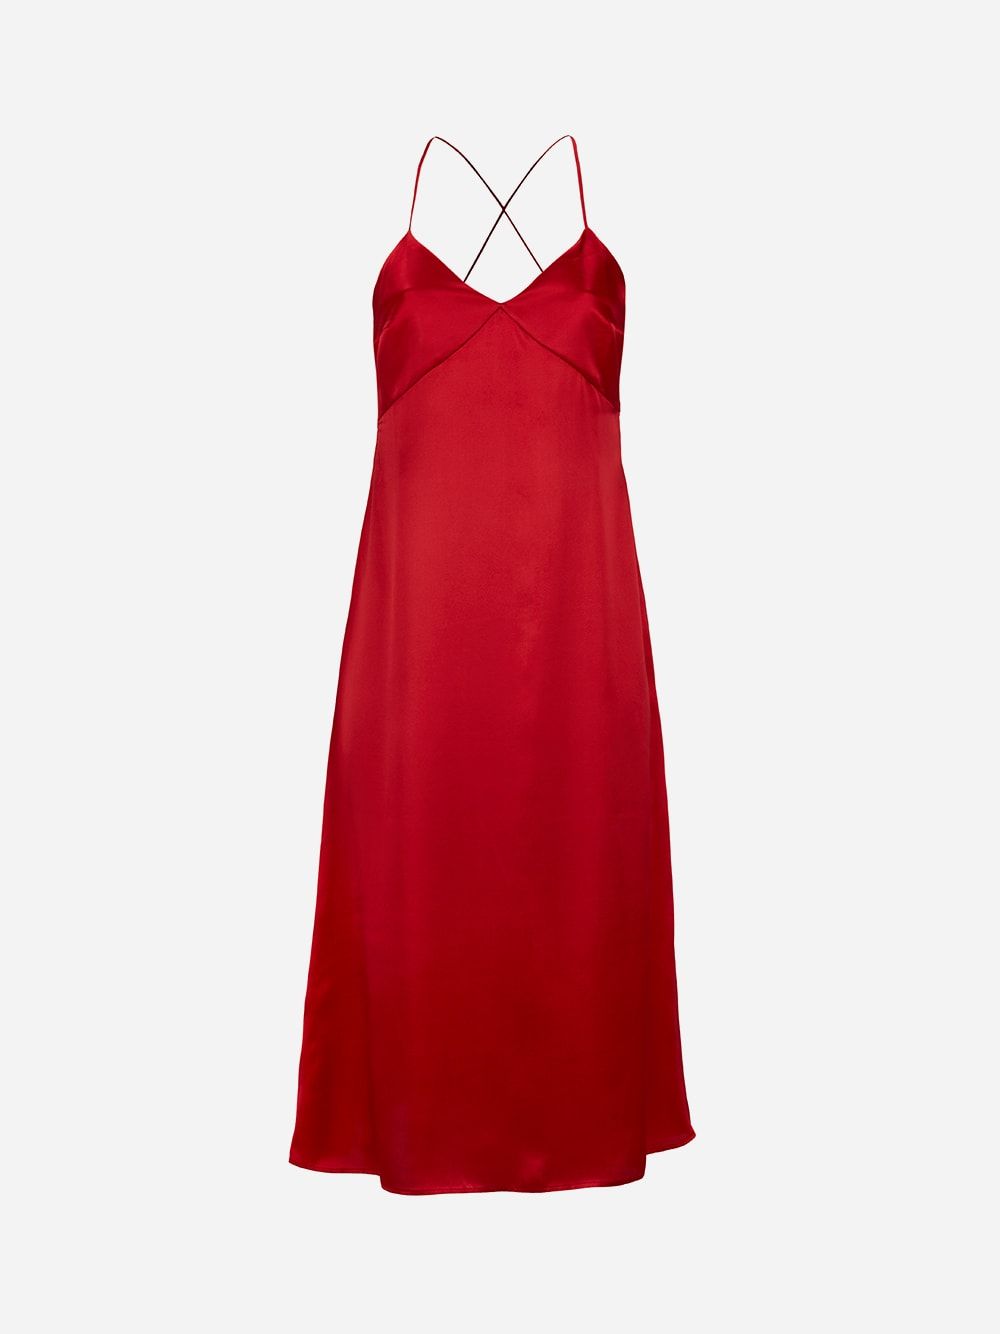 Red Dress | On Atlas